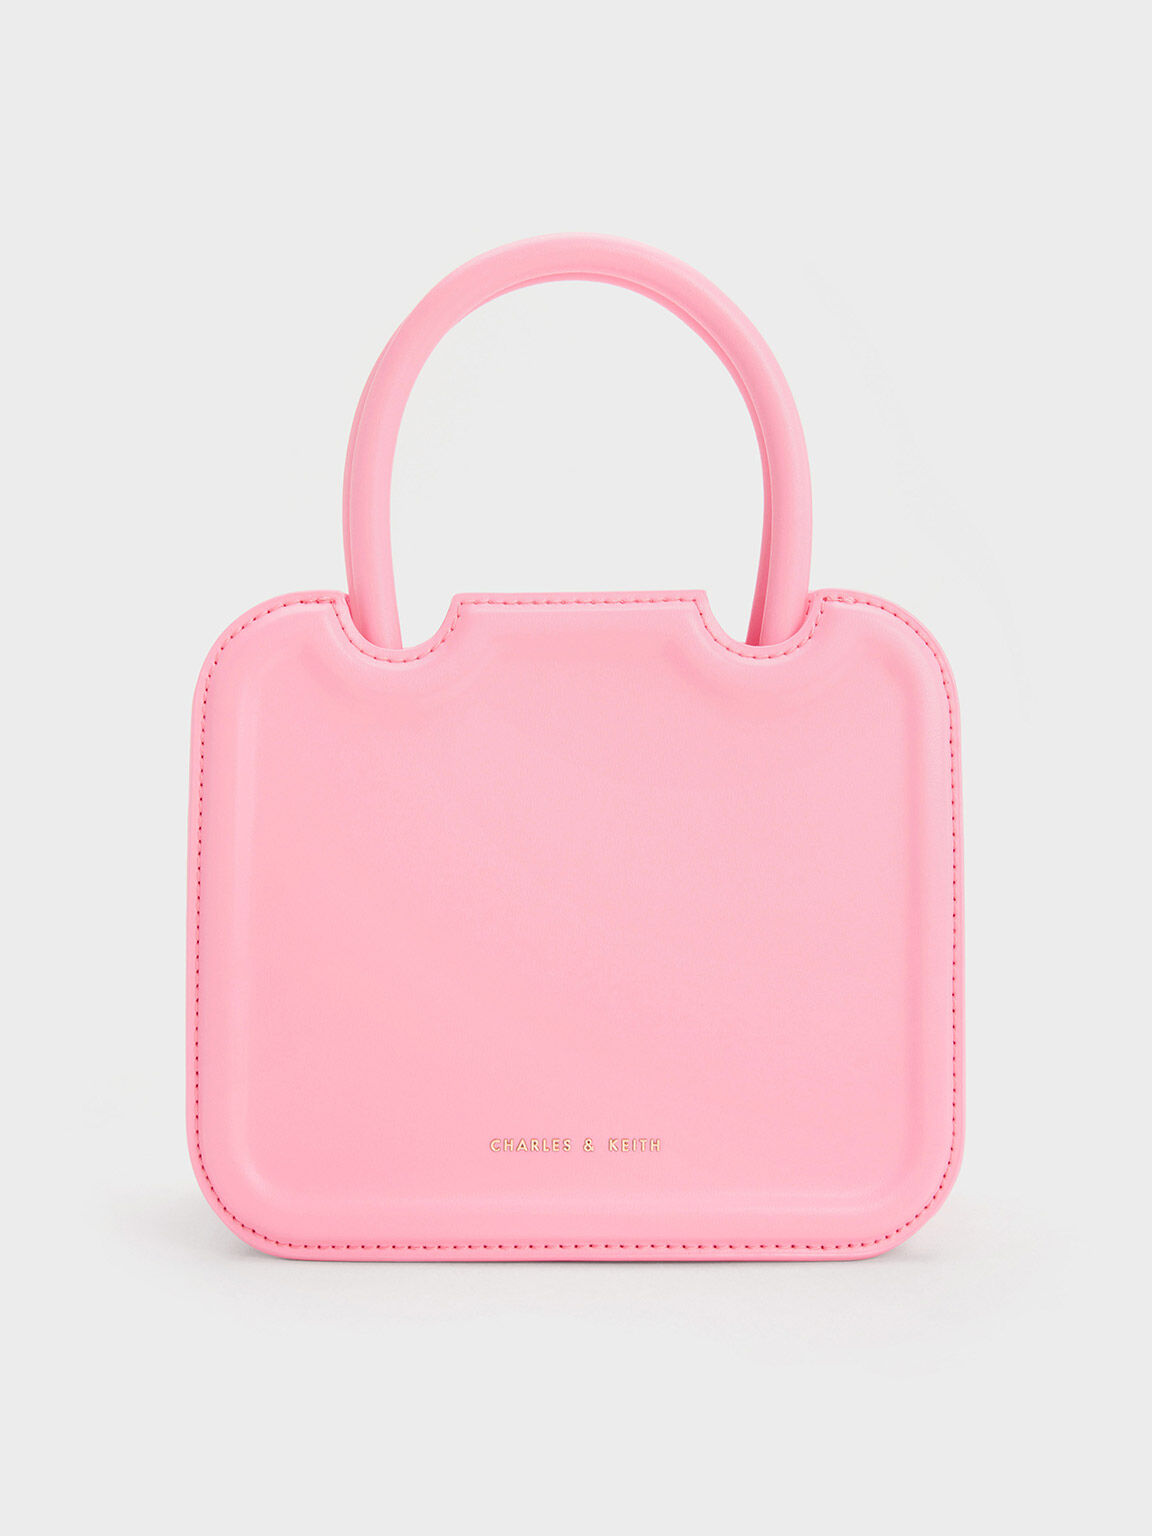 Pink Handbags, Bags